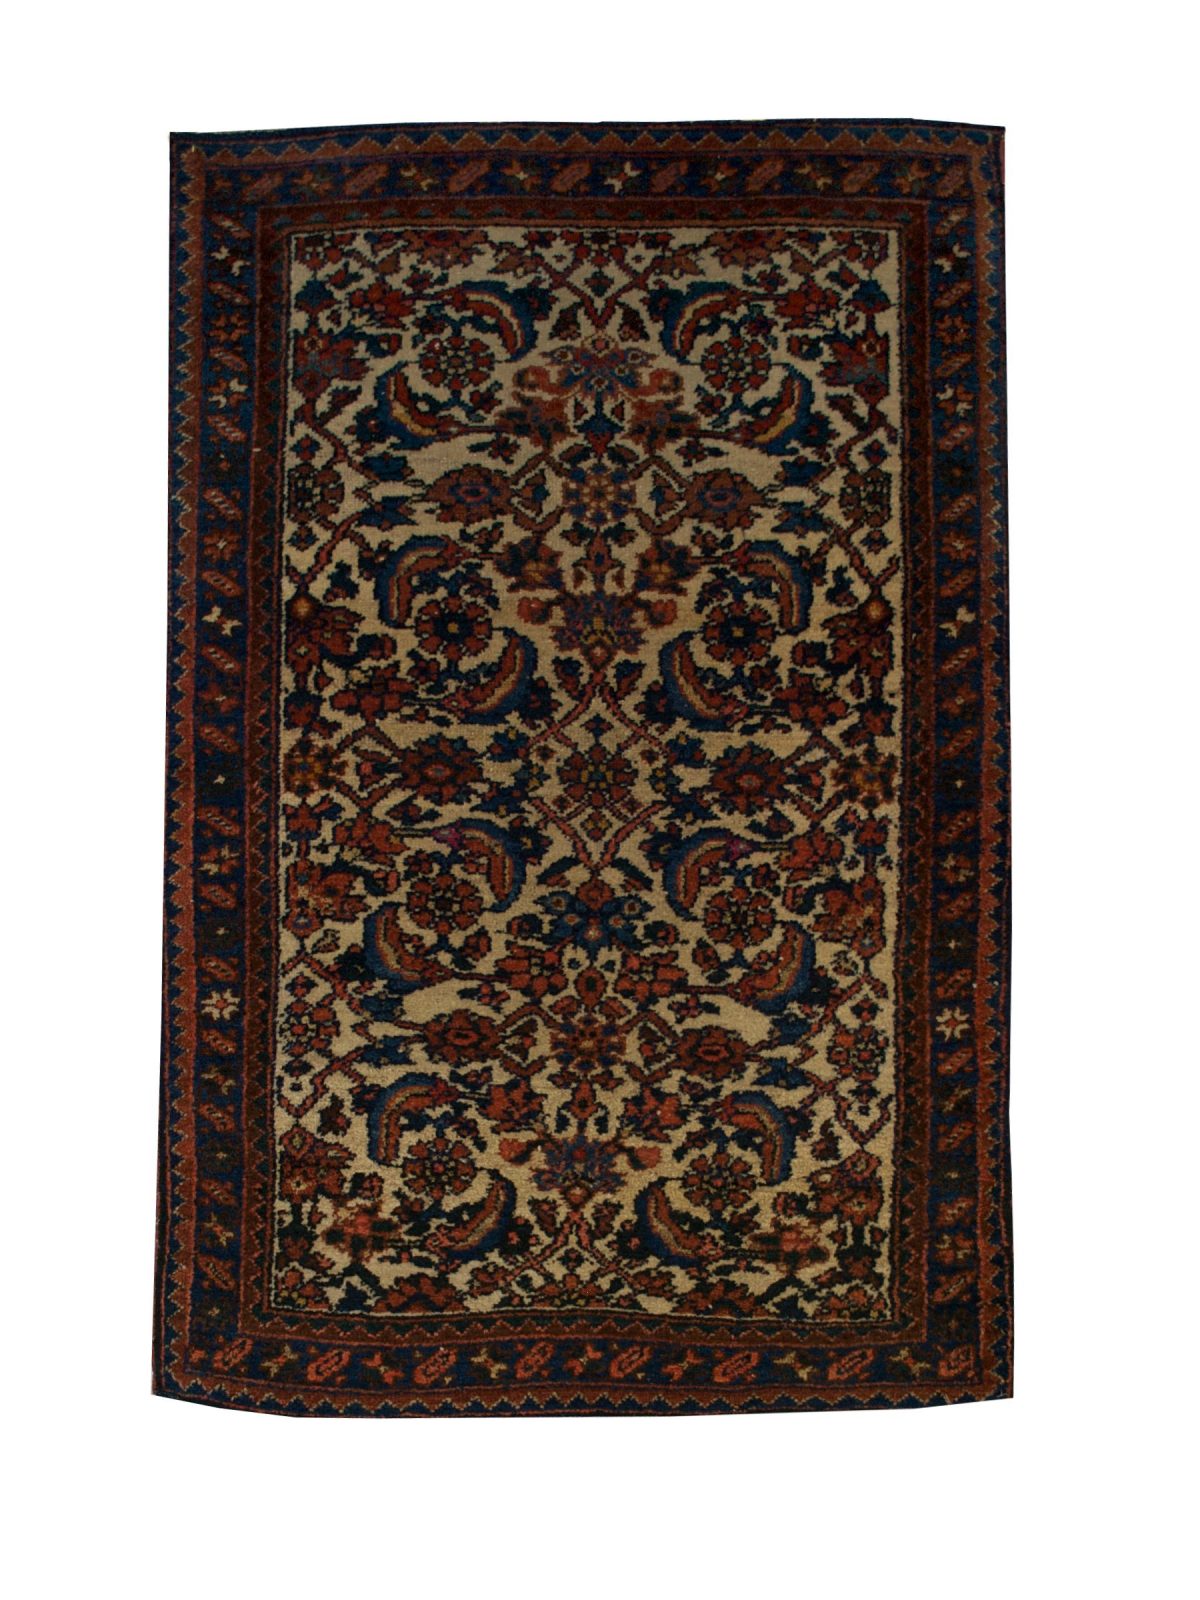 Antique Persian Hamadan Handmade Wool Area Rug - Shabahang Royal Carpet